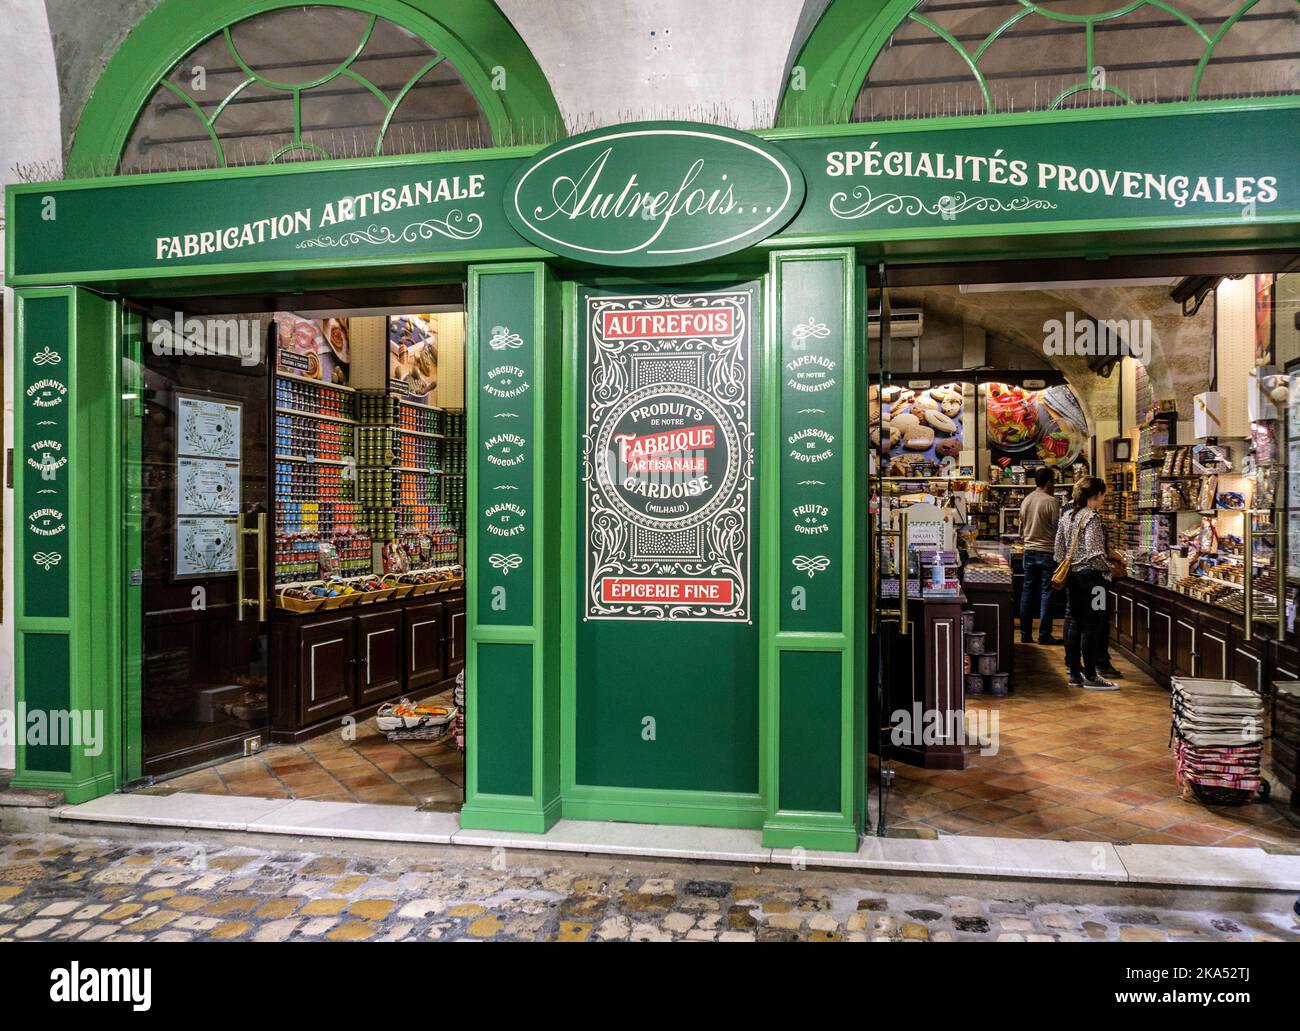 Boutique Autrefois, Uzes, France. A gourmet grocery store. Stock Photo